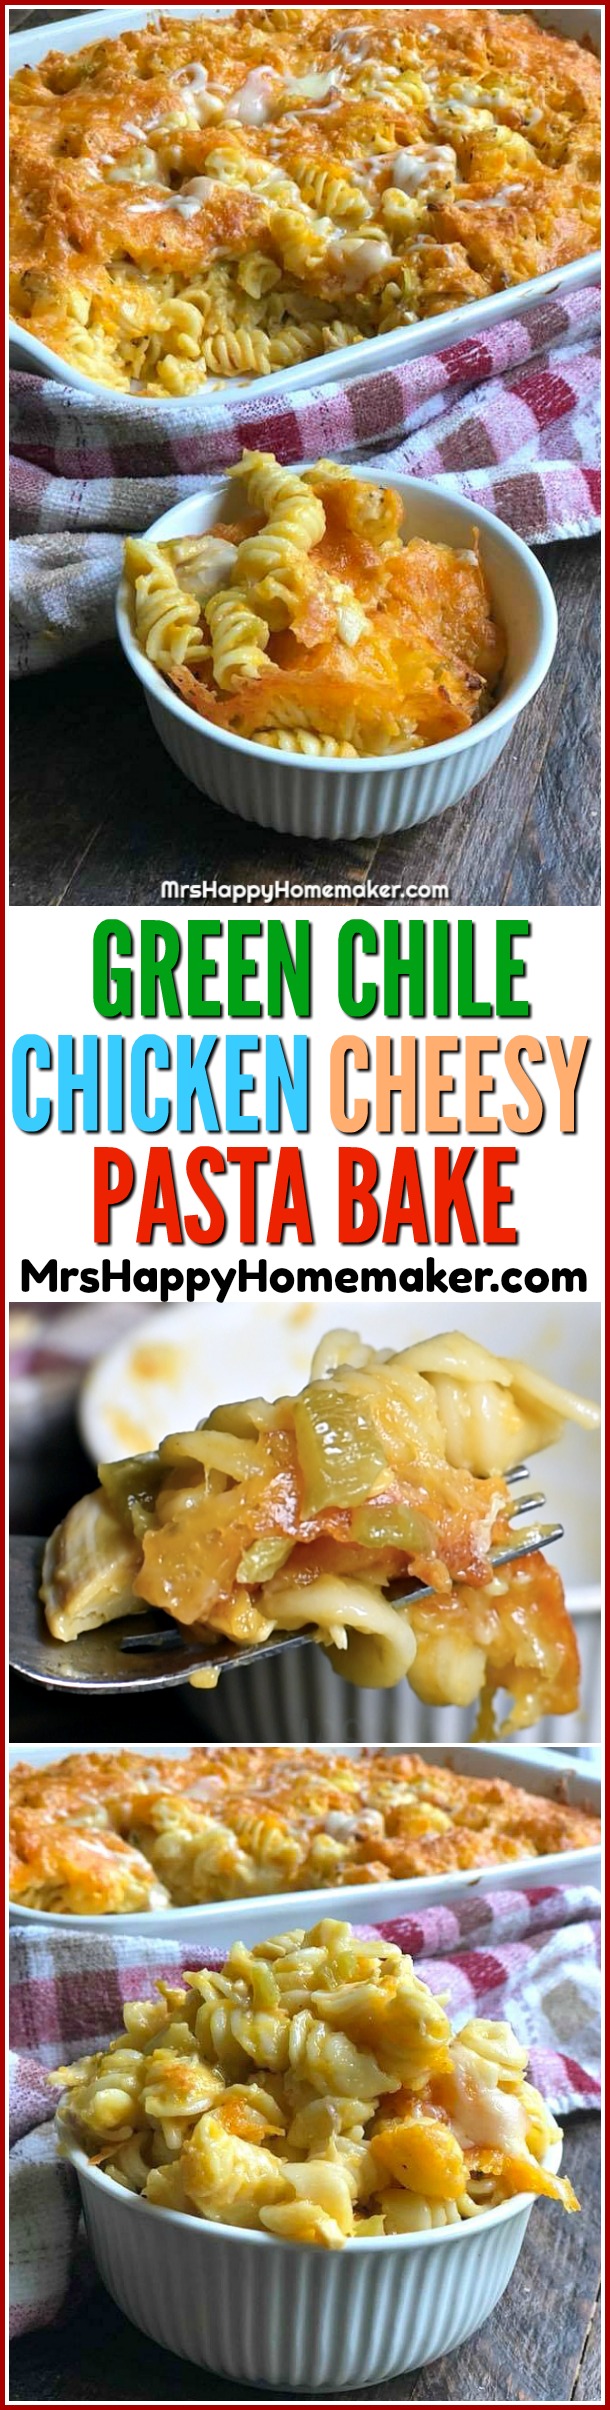 Green Chile Chicken Cheesy Pasta Bake | MrsHappyHomemaker.com 